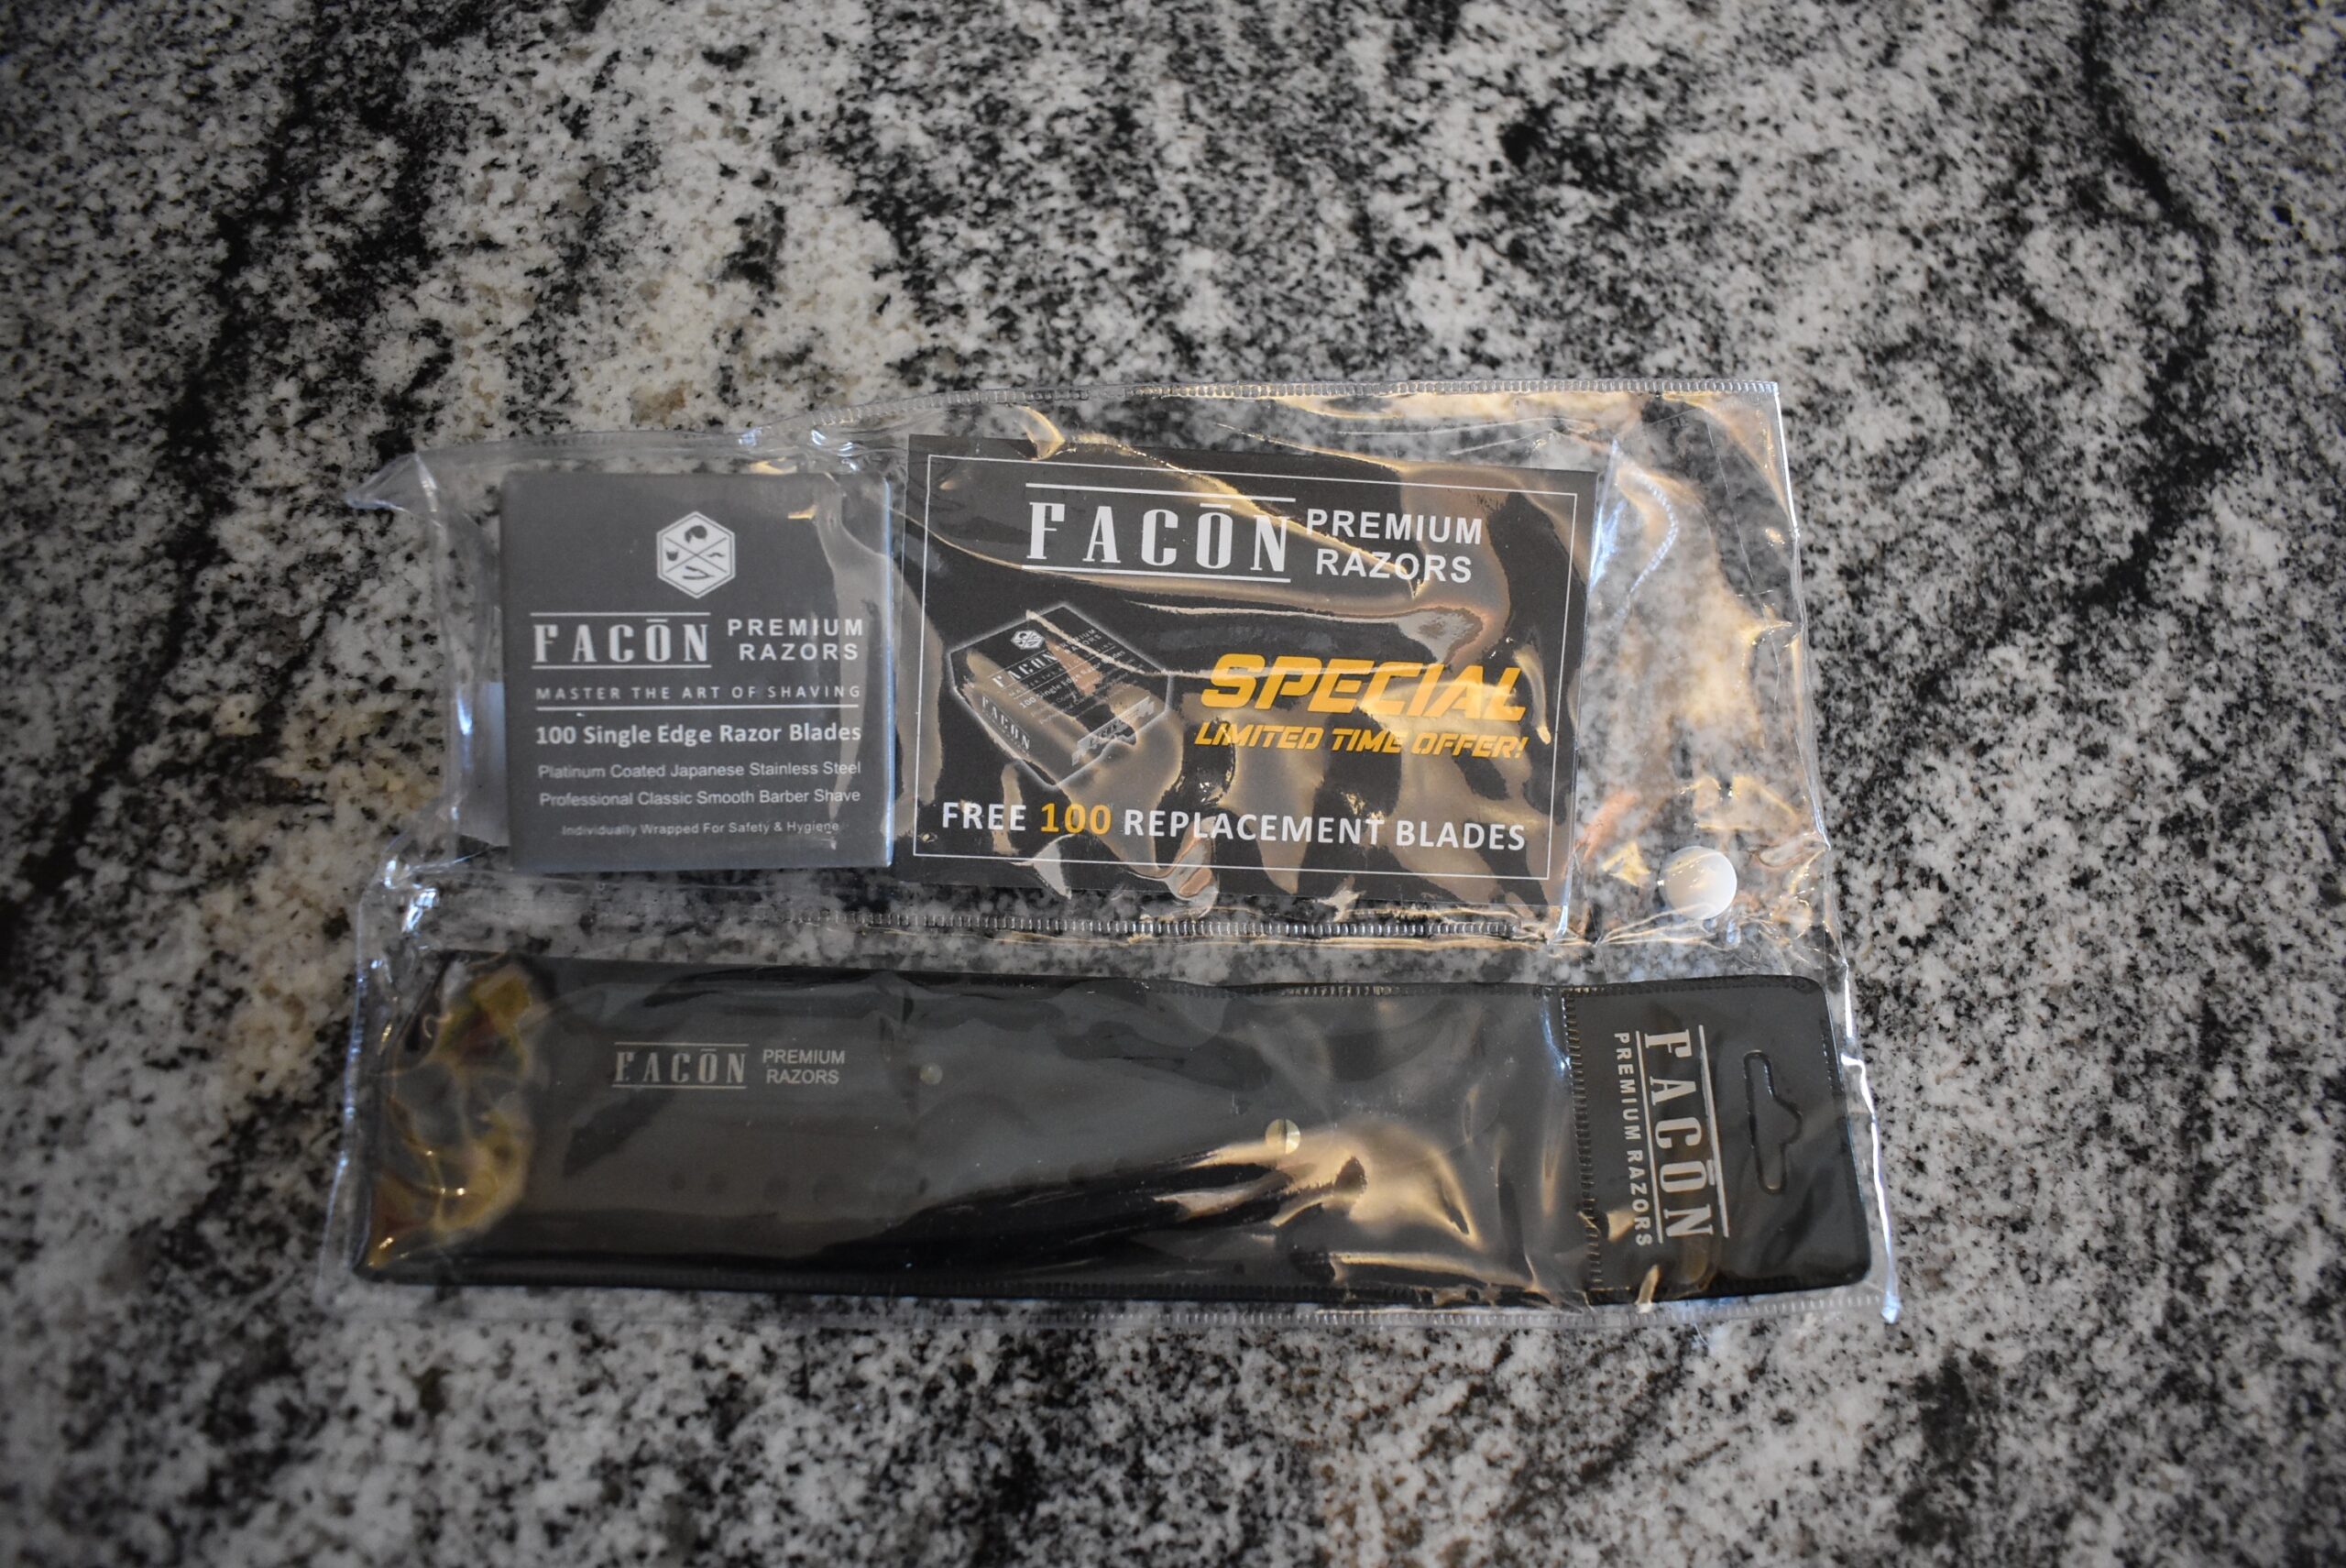 The Facon premium razors straight edge razor in its packaging